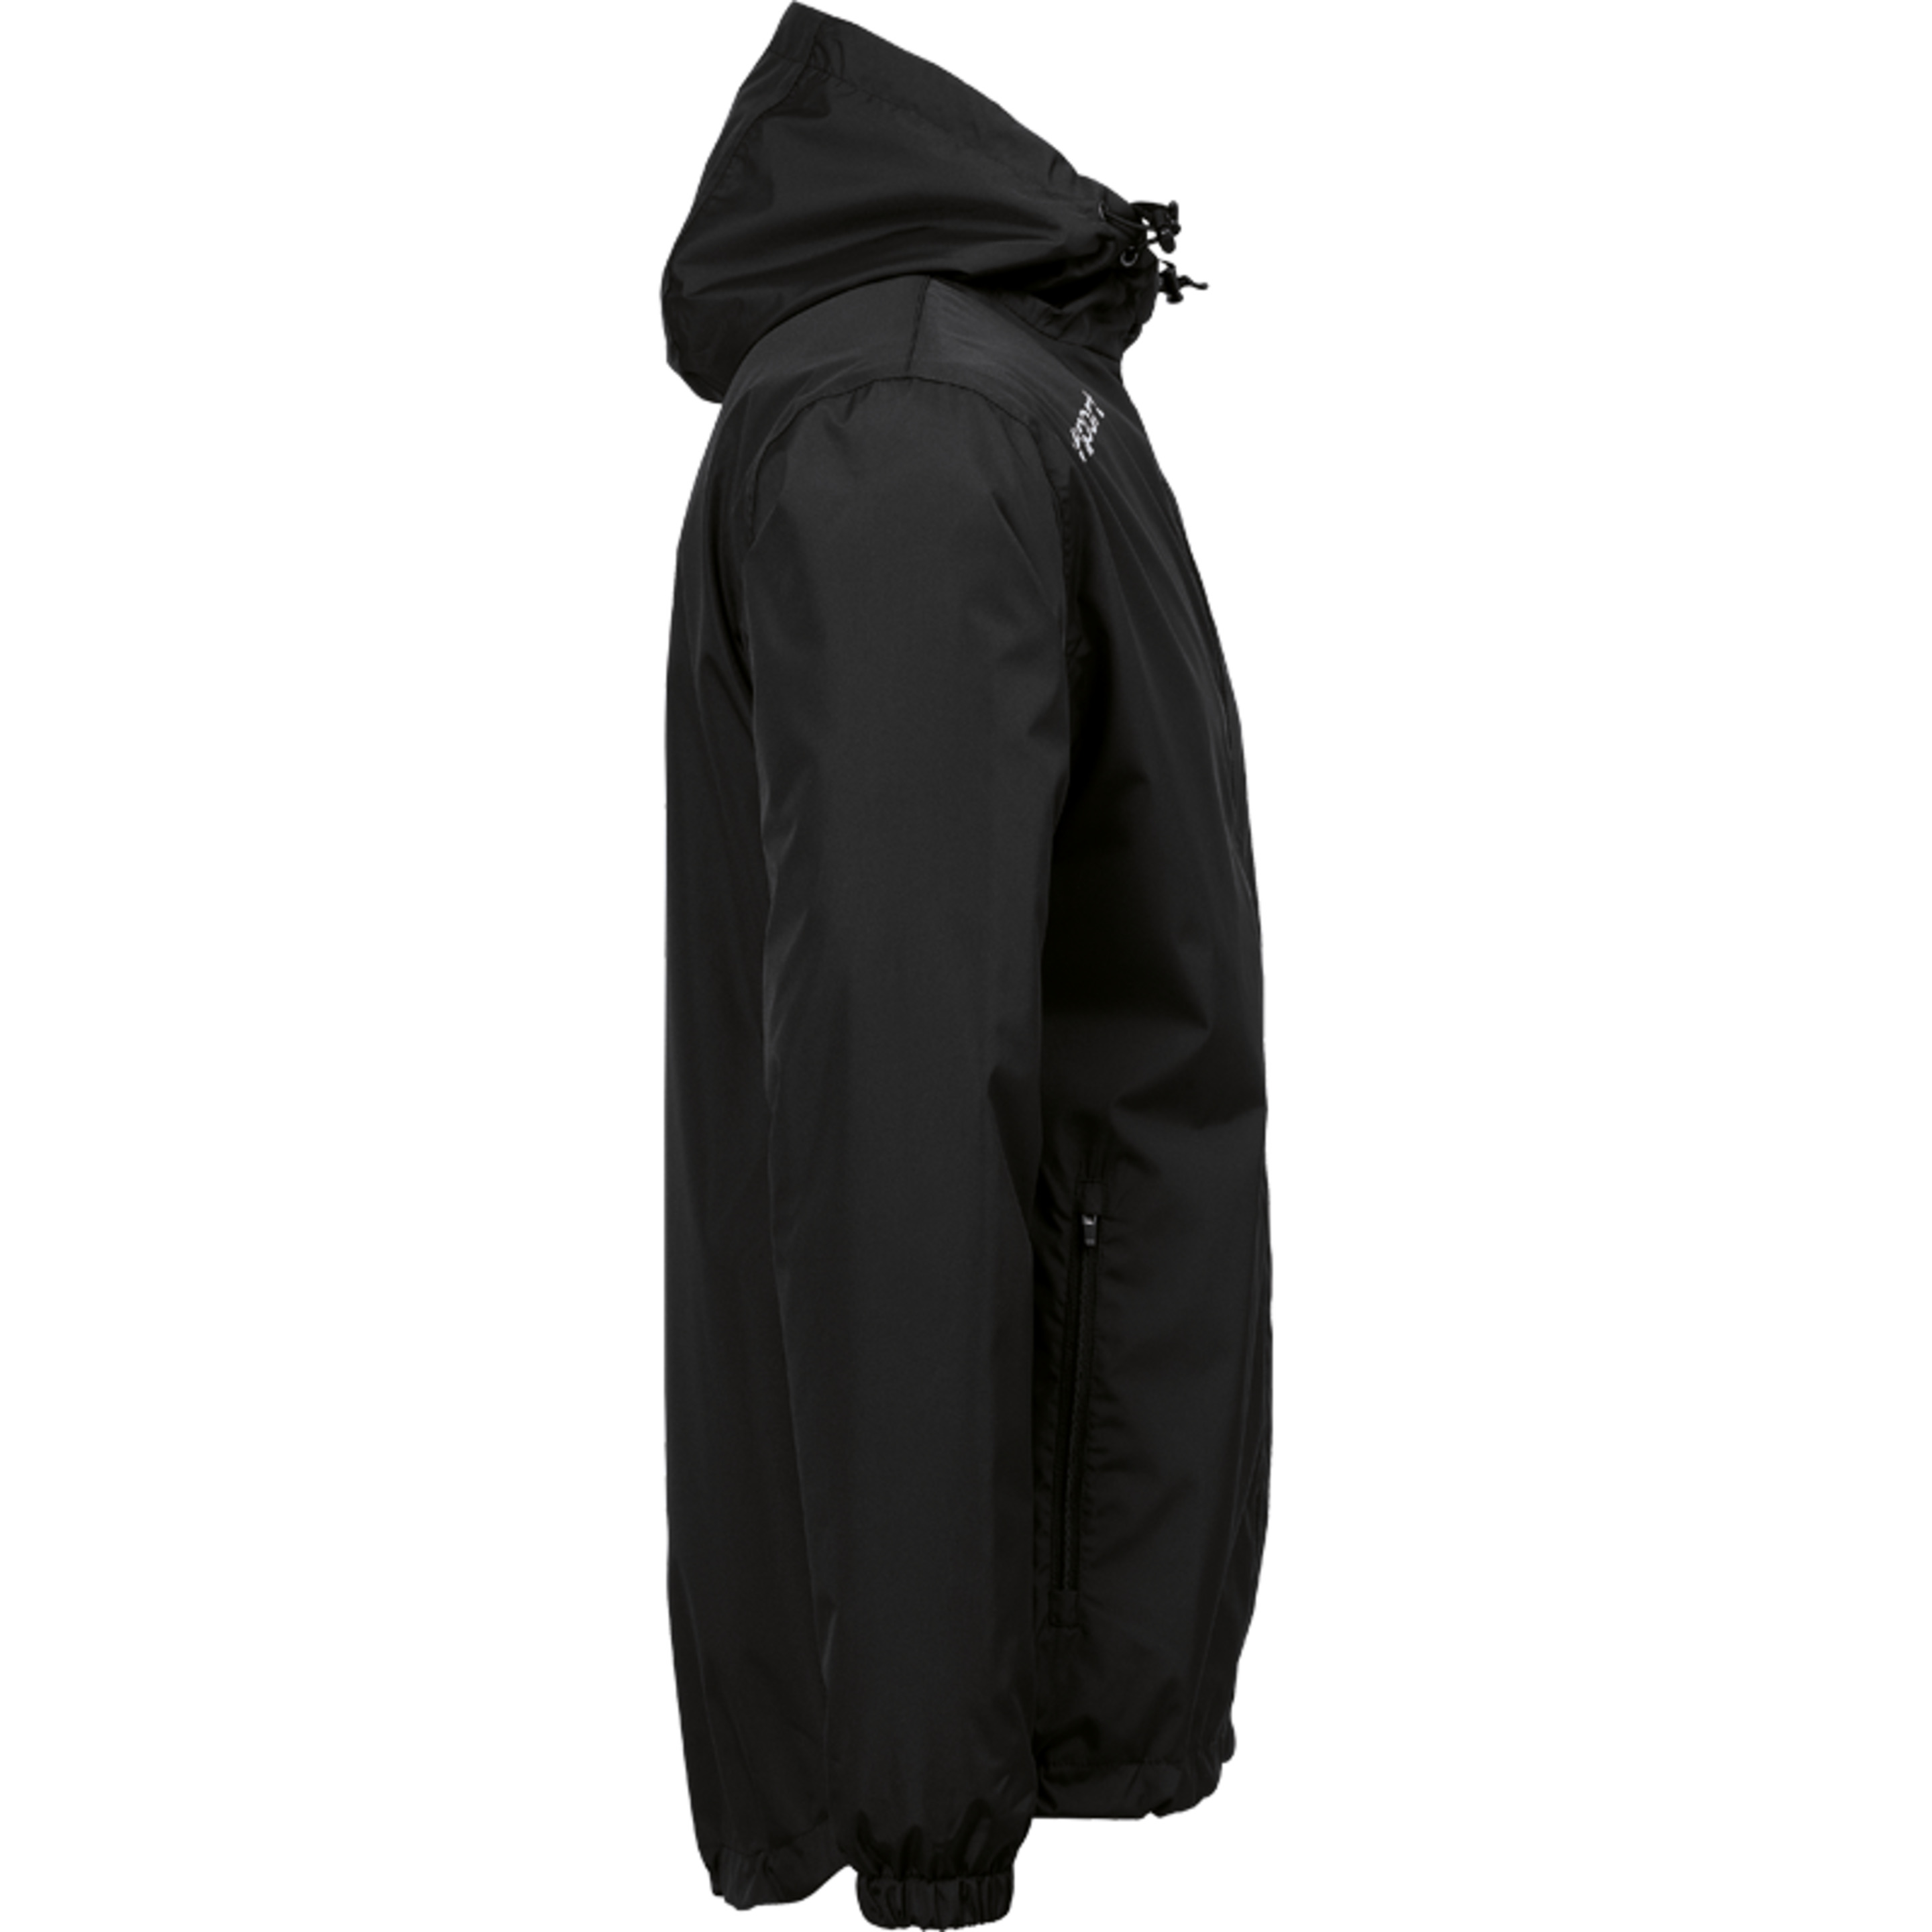 Essential Rain Jacket Negro/blanco Uhlsport - negro_blanco - Essential Rain Jacket Negro/blanco Uhlsport  MKP